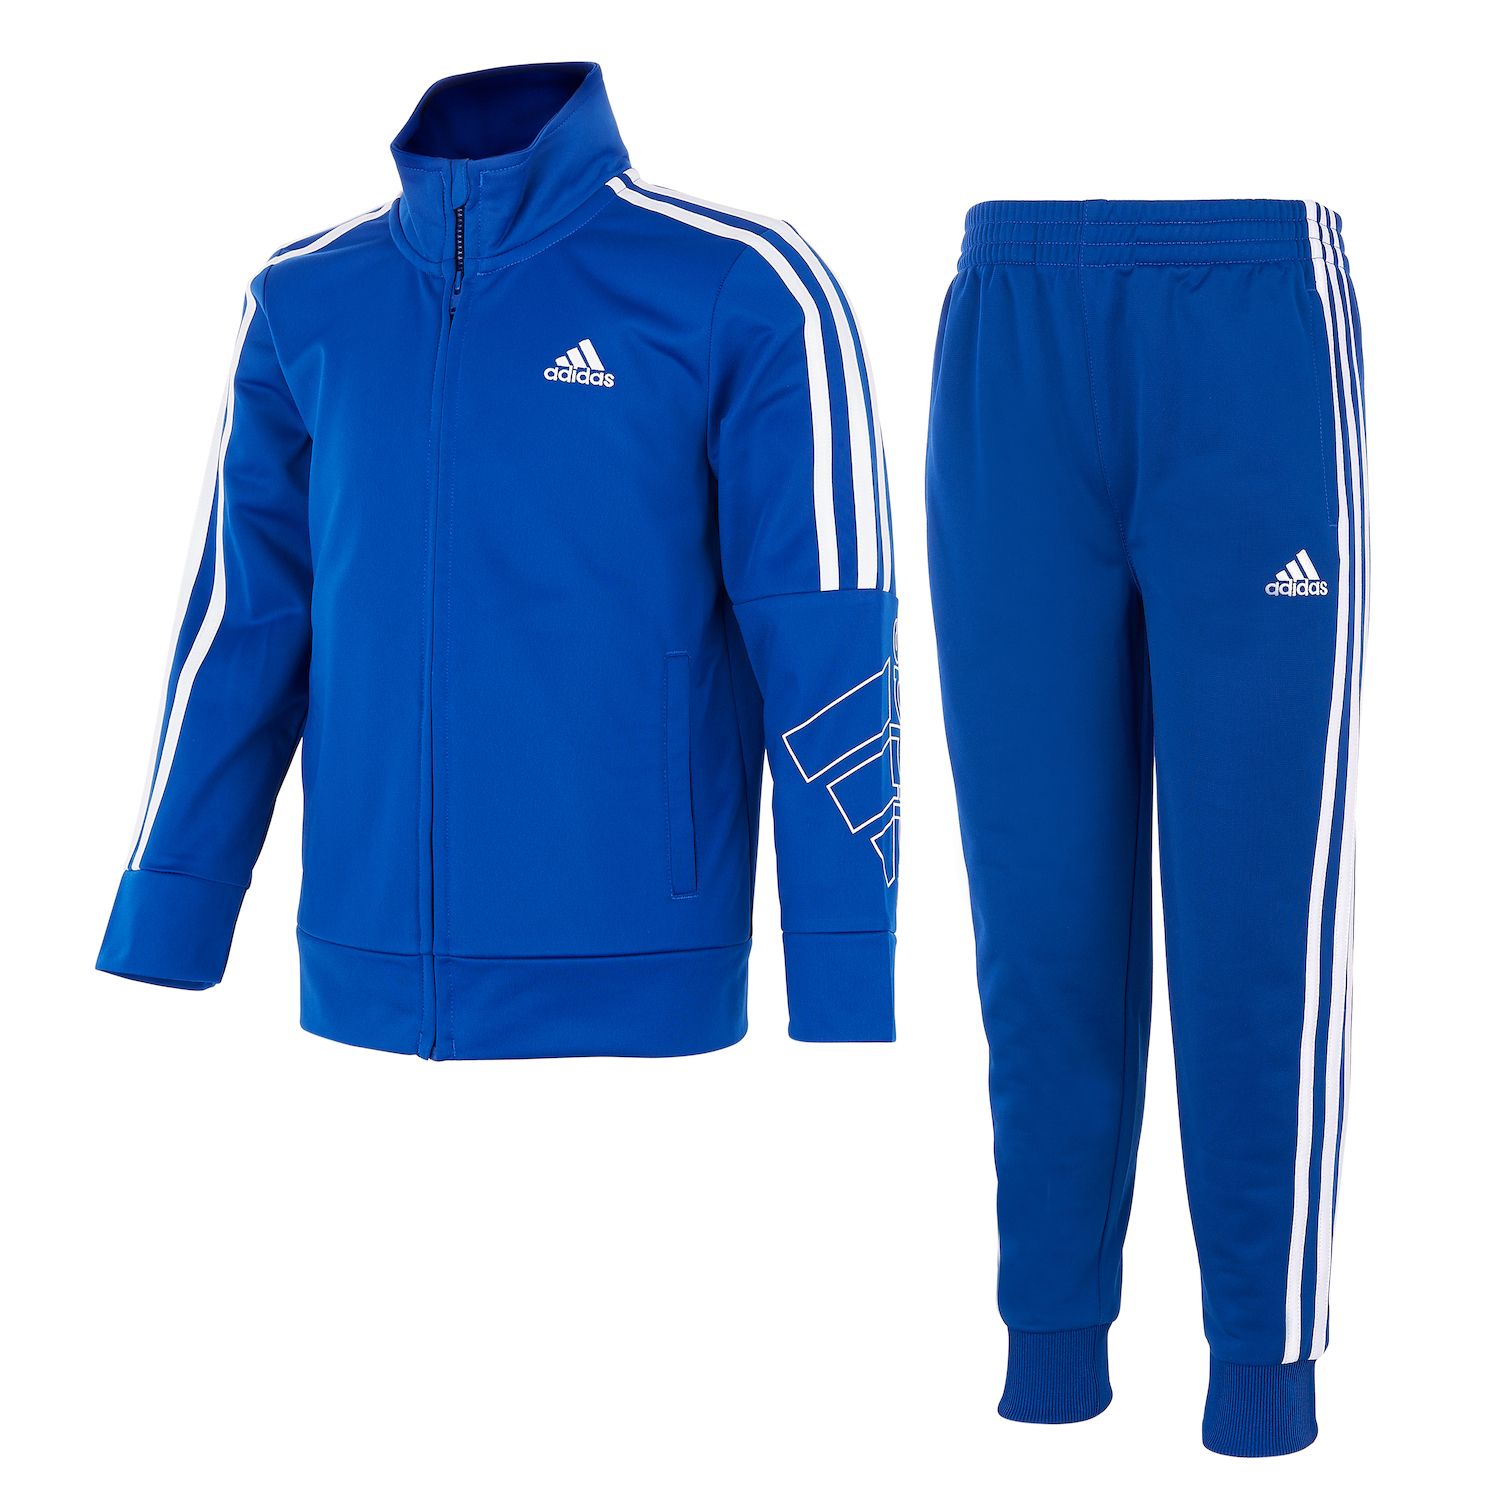 boys blue adidas jacket